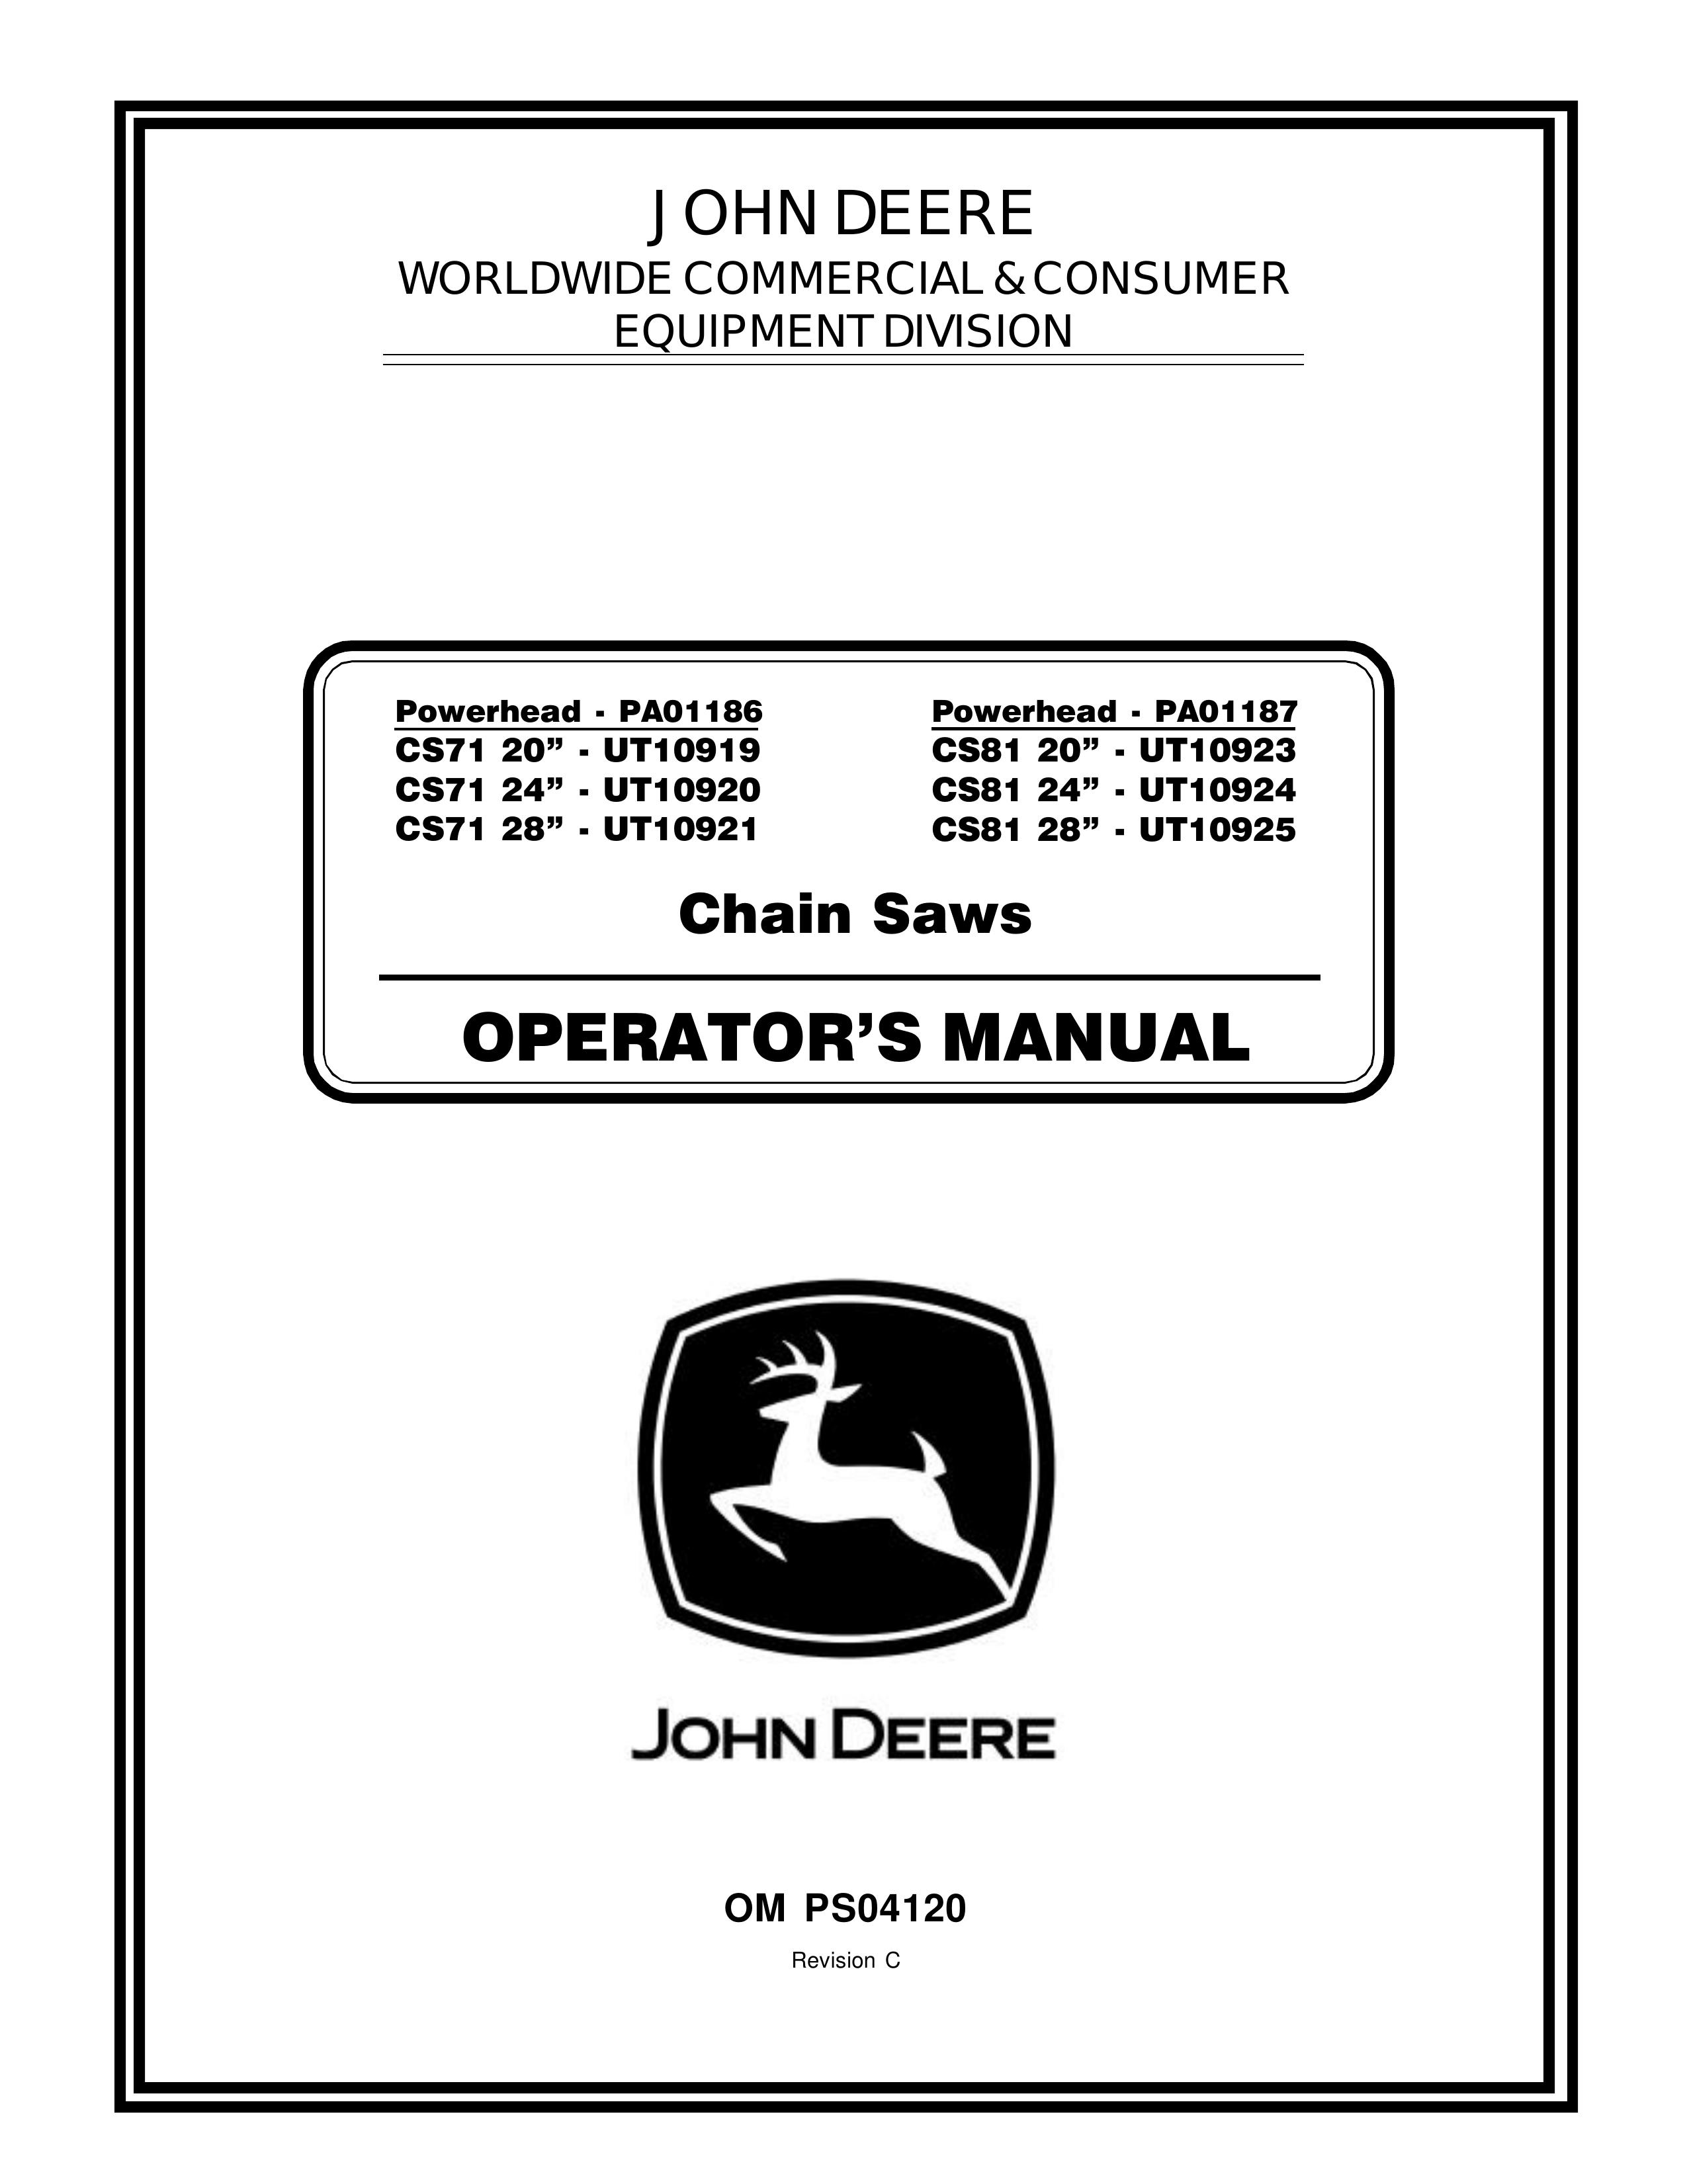 John Deere PA01187 CS81 Chainsaw User Manual